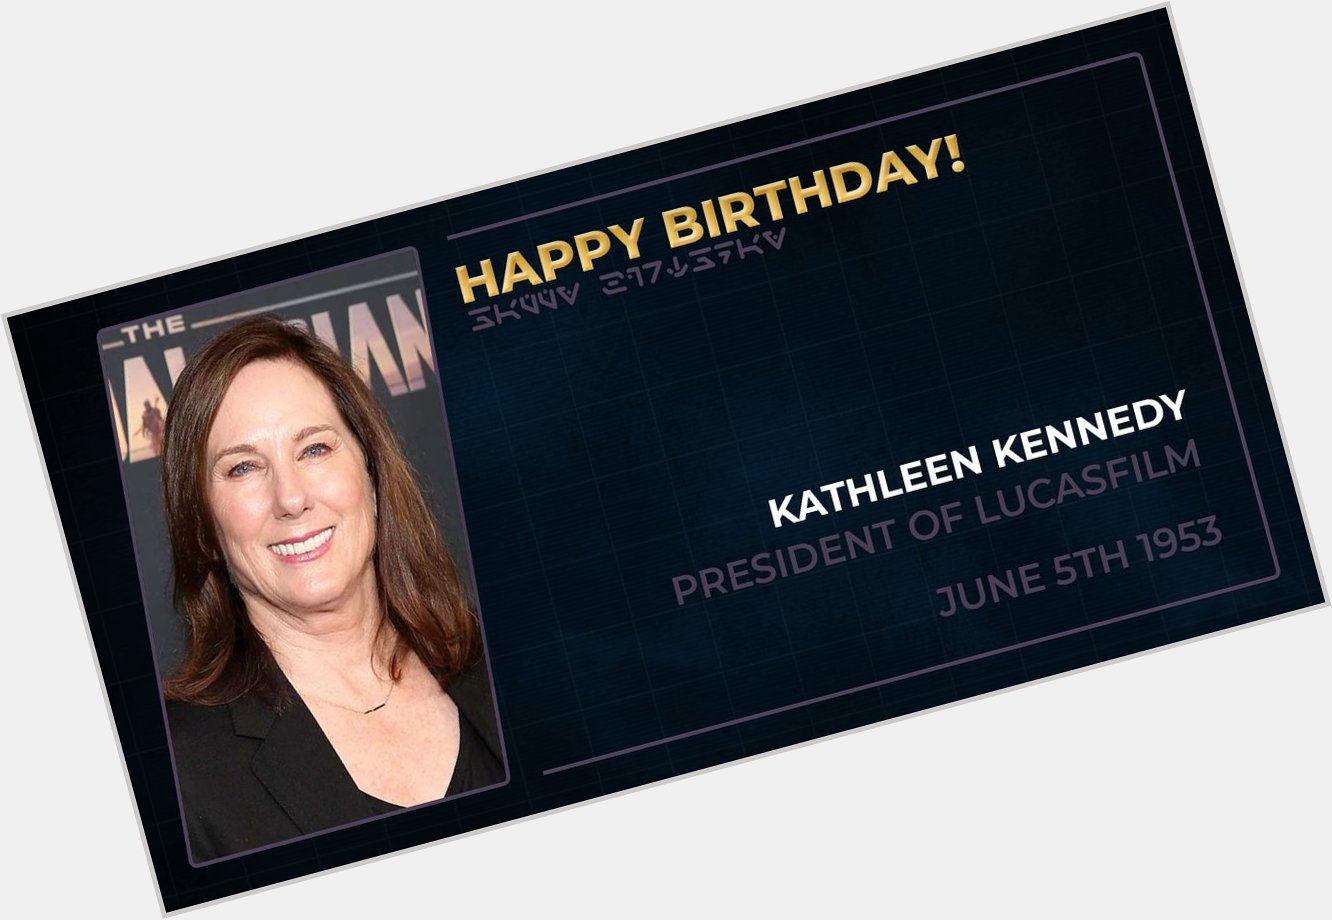 Happy birthday to Kathleen Kennedy, President of Lucasfilm!   